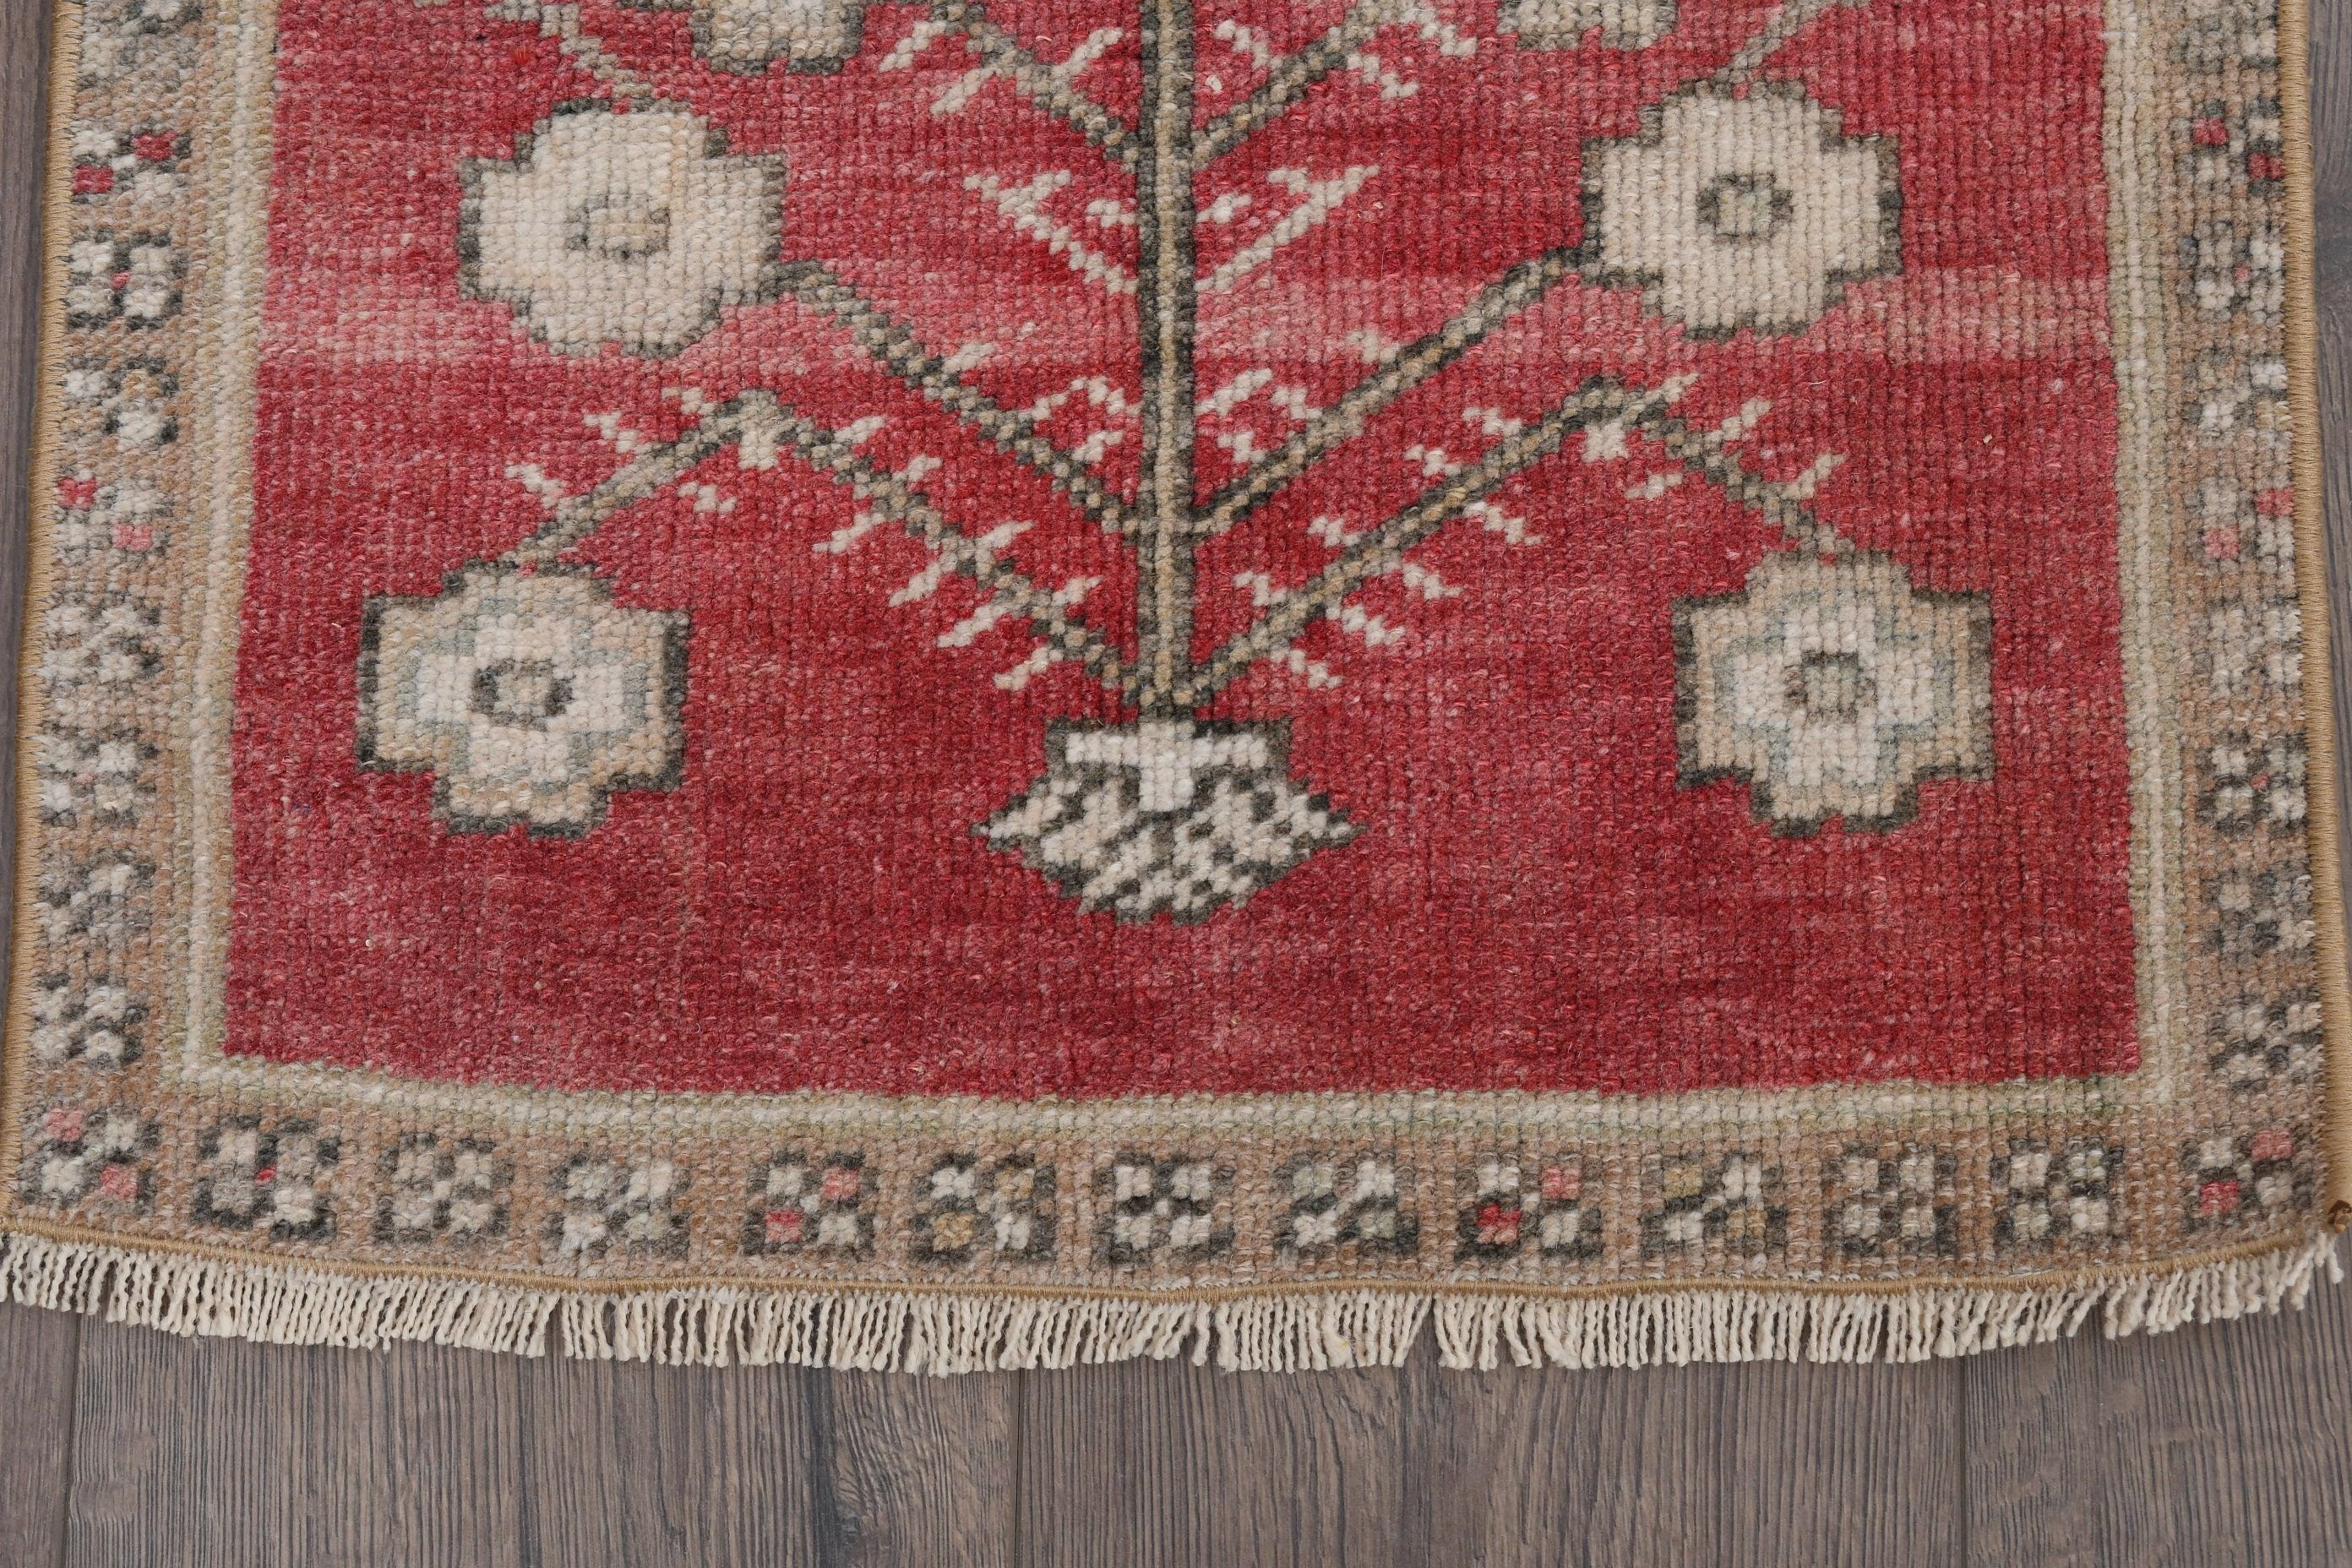 Bedroom Rug, Oushak Rugs, Red Oushak Rugs, Door Mat Rug, Rugs for Wall Hanging, Vintage Rug, Turkish Rugs, 1.6x1.4 ft Small Rug, Wool Rug